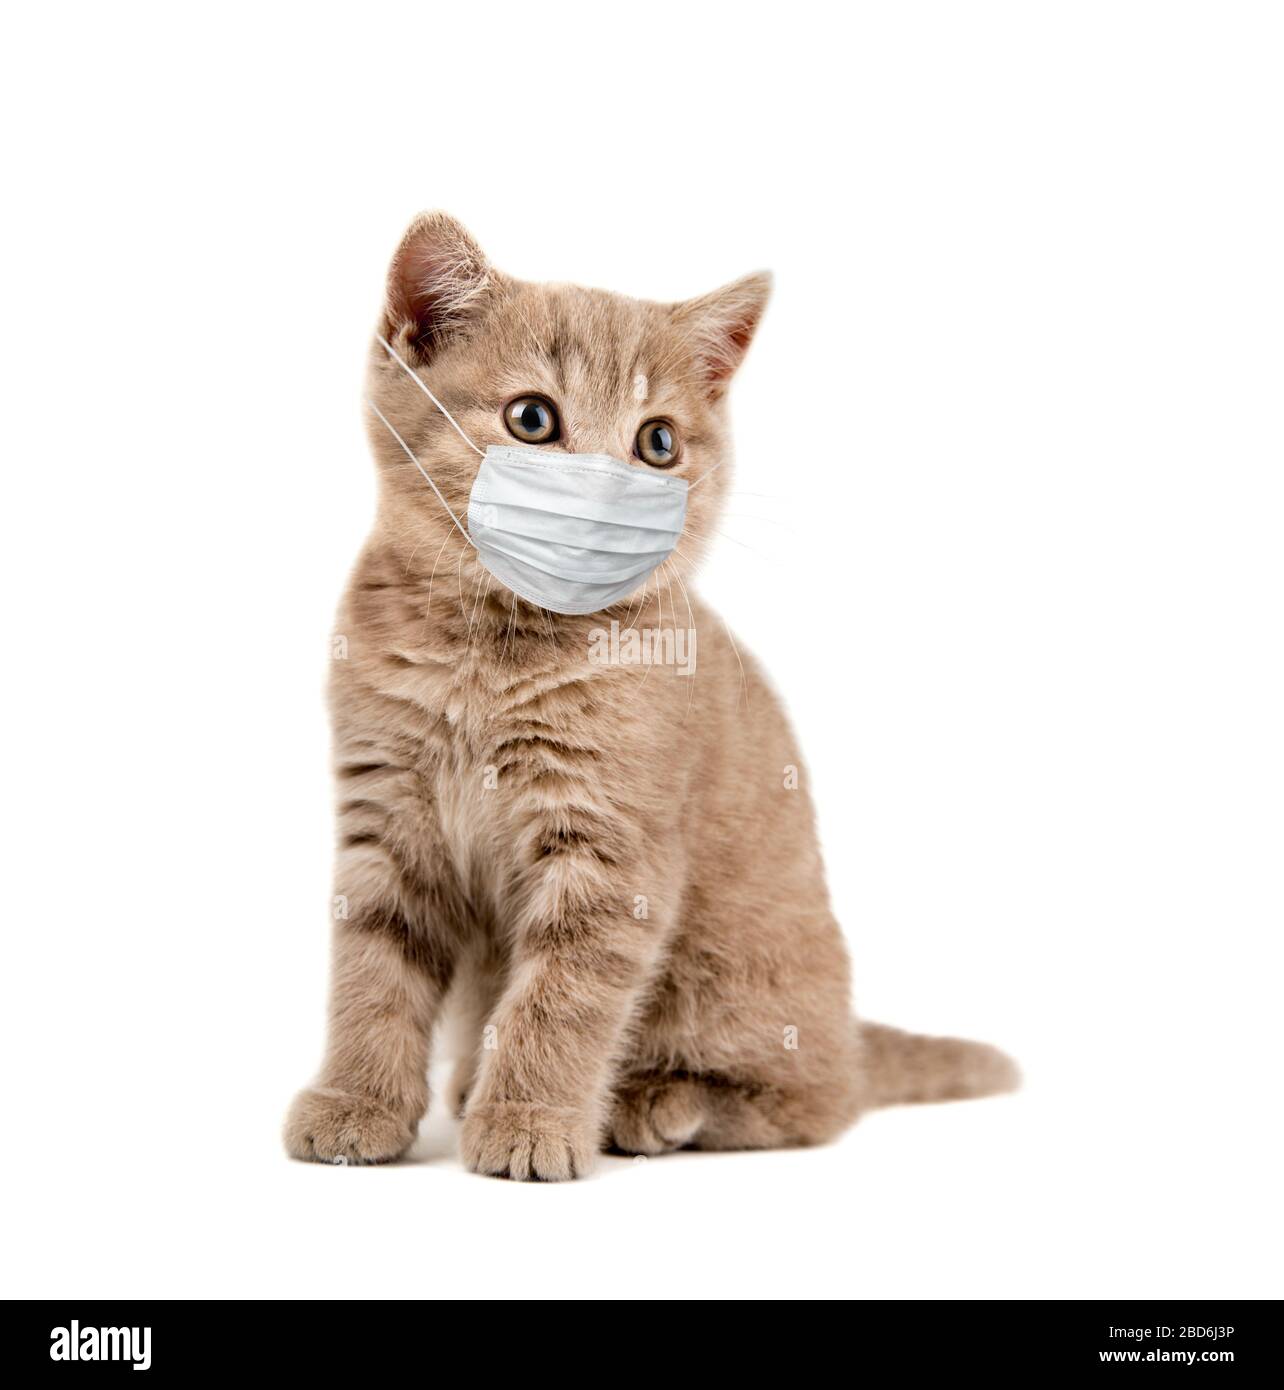 little kitten in medical mask, on white background, isolated. Concept covid-19 coronavirus pandemic Stock Photo